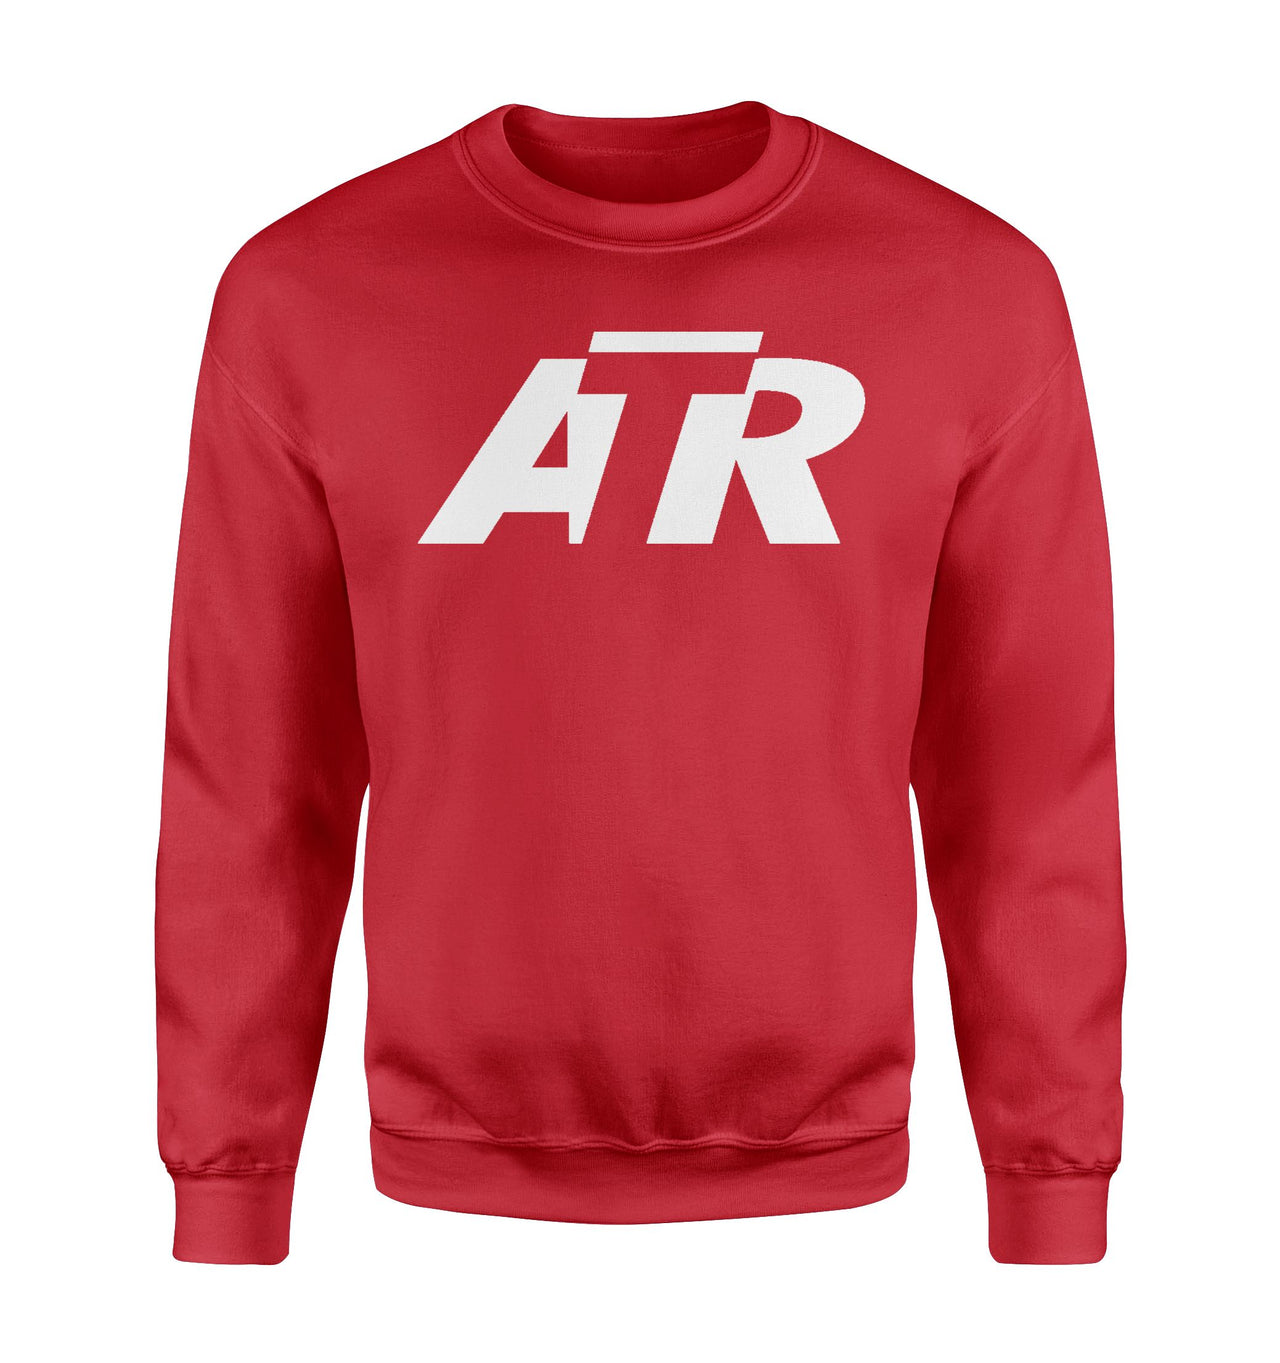 ATR & Text Designed Sweatshirts